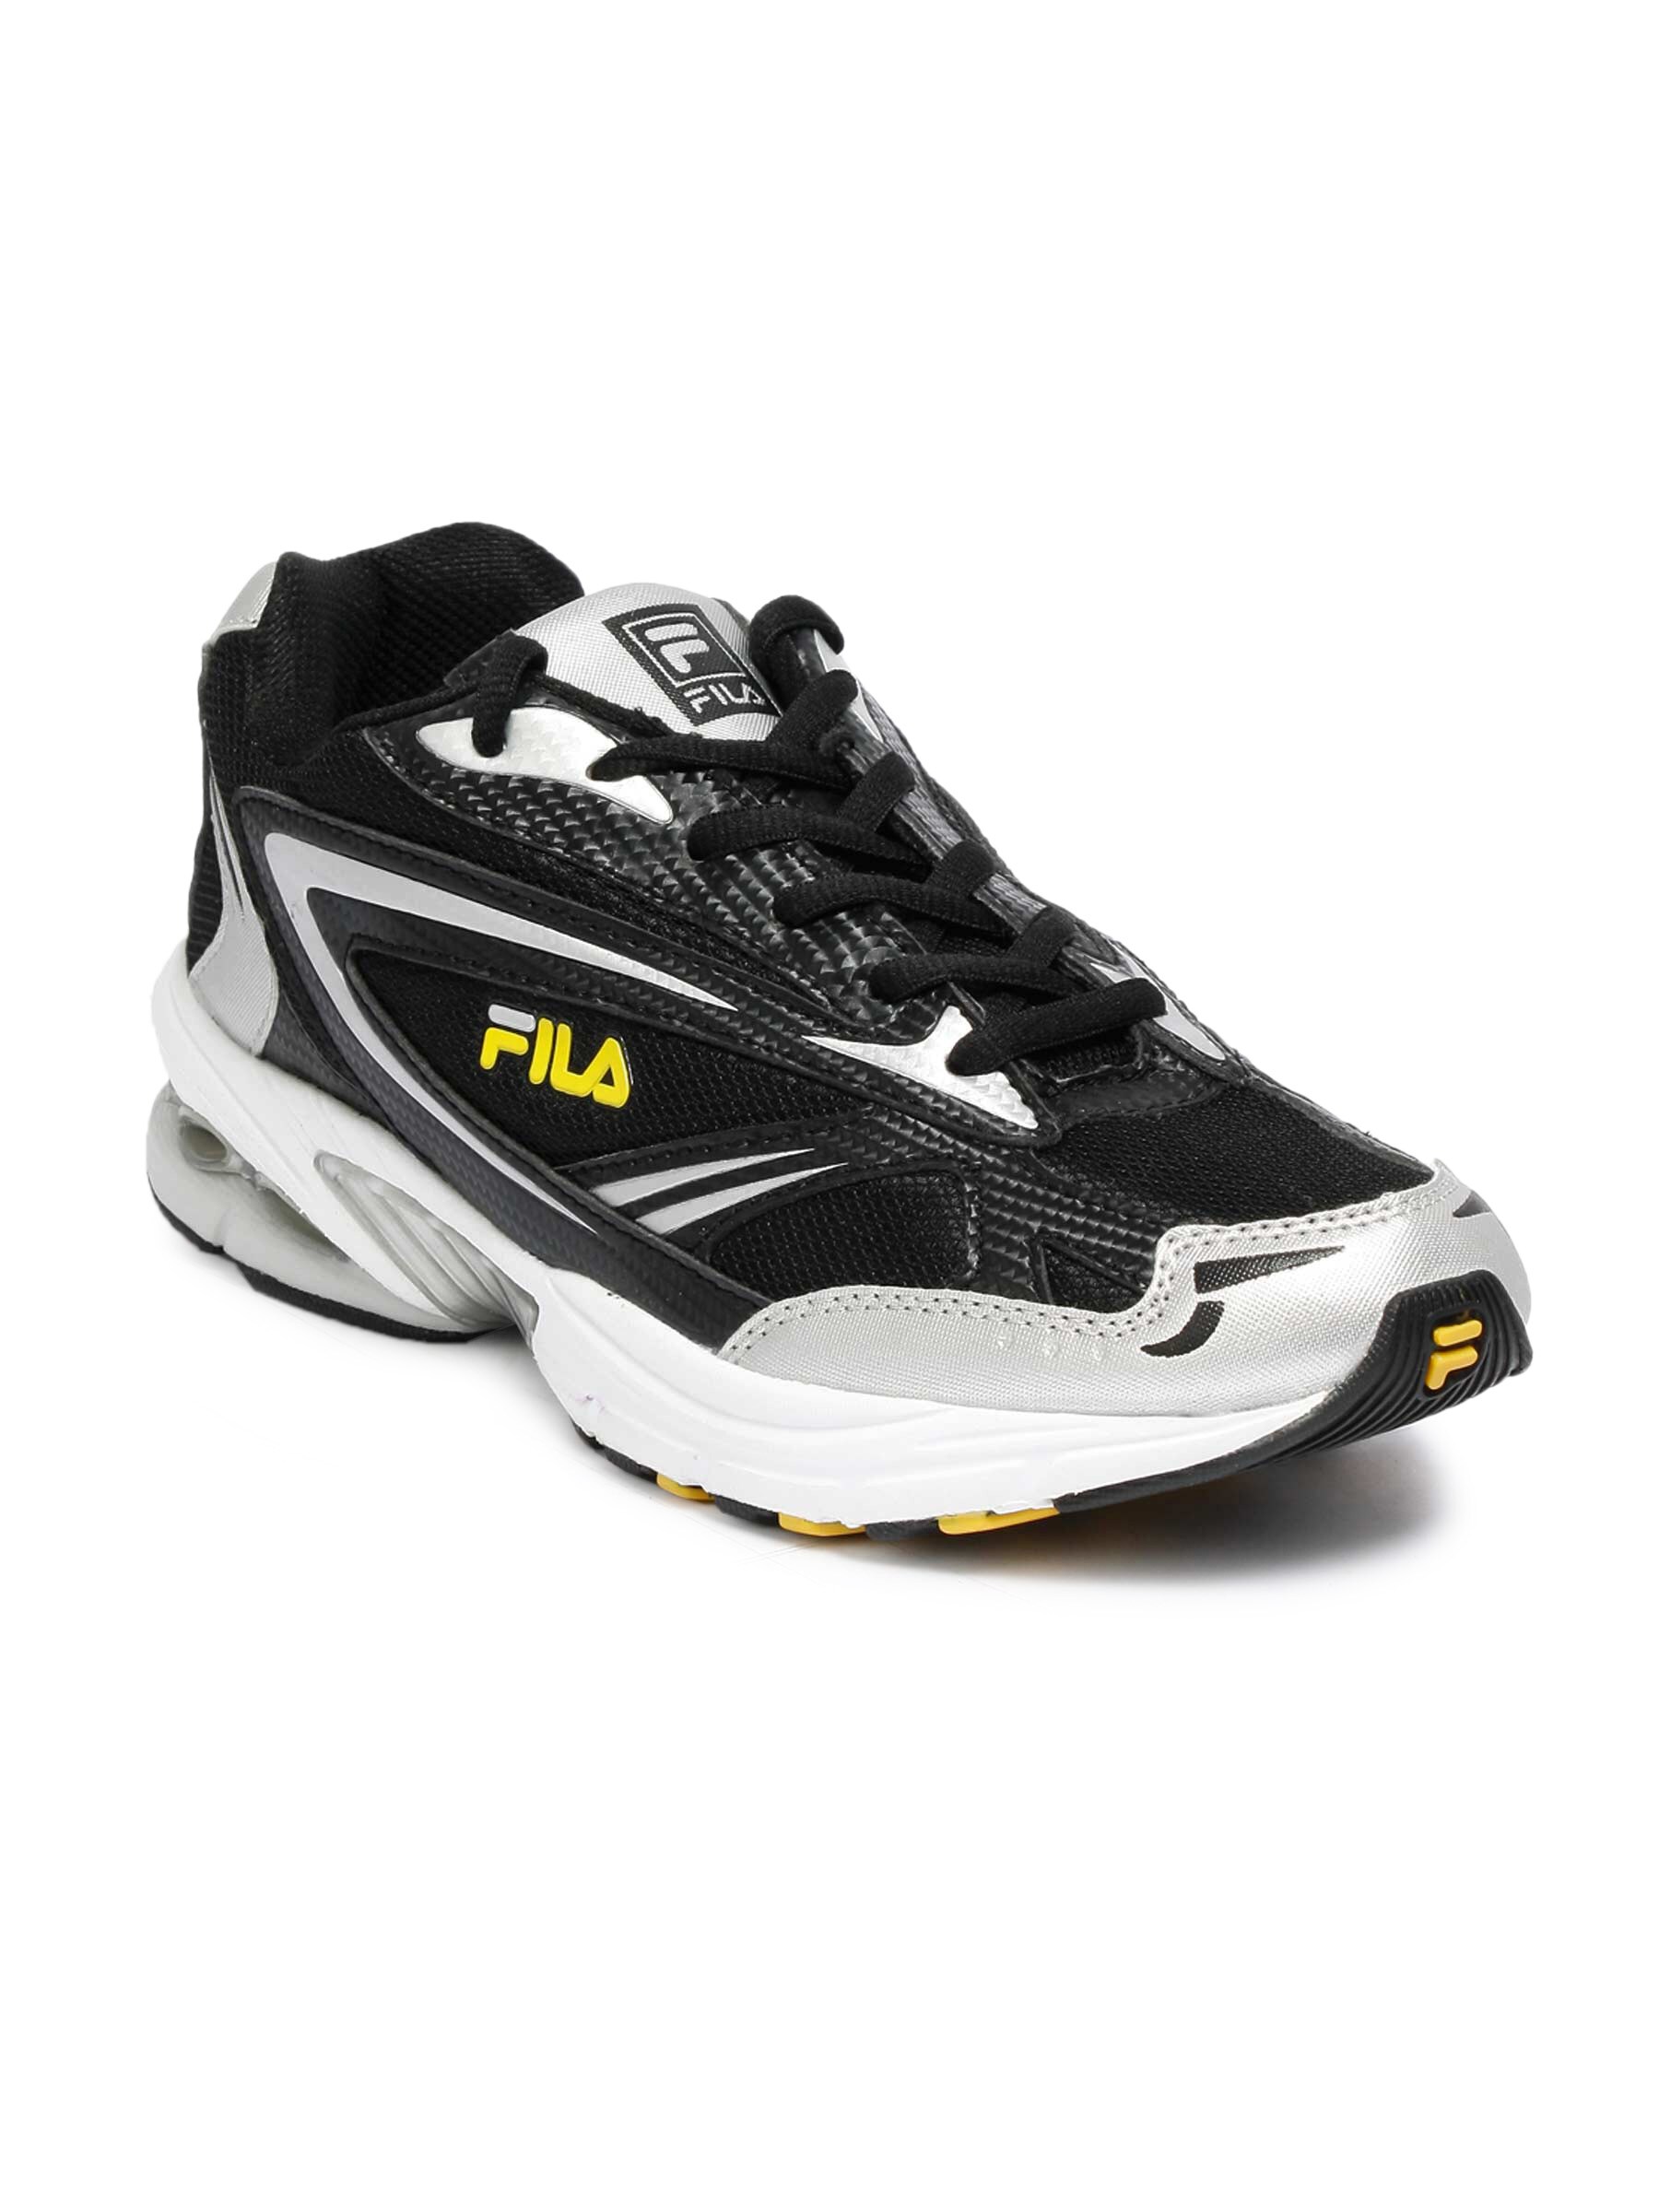 Fila Men Racer New Black Sports Shoes